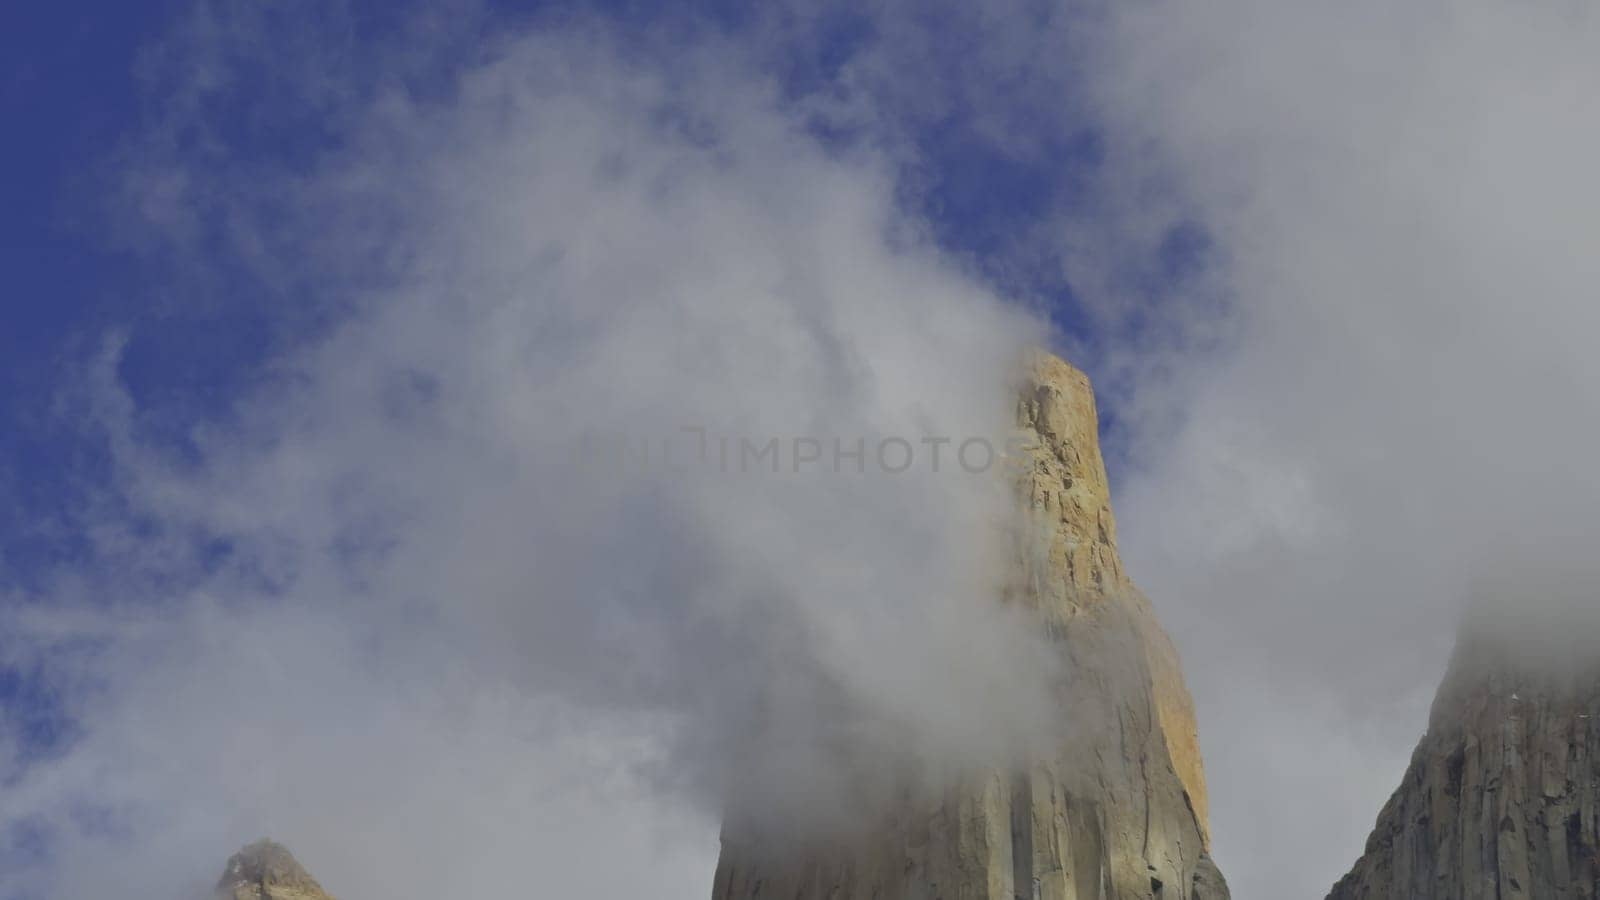 Torres del Paine Peaks Shrouded in Misty Clouds by FerradalFCG